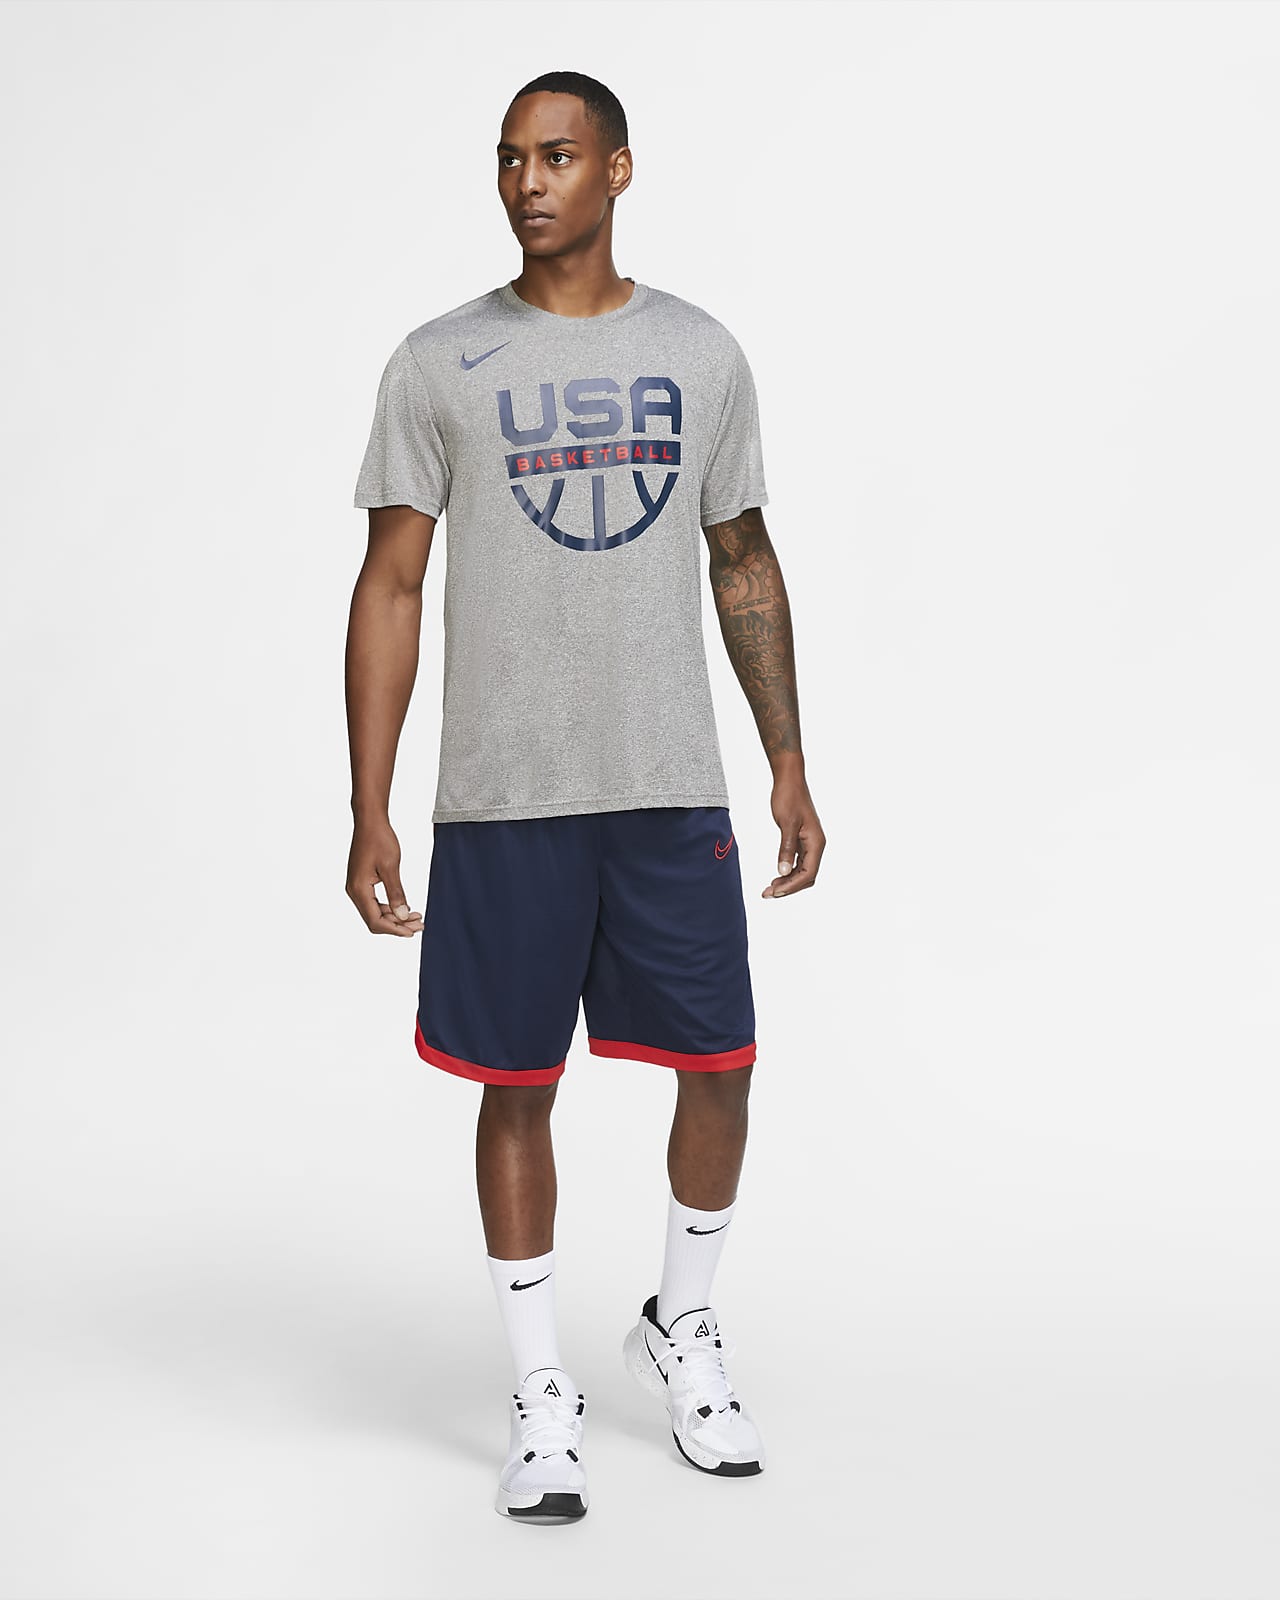 Nike公式 Usab ナイキ Dri Fit メンズ バスケットボール プラクティス Tシャツ オンラインストア 通販サイト